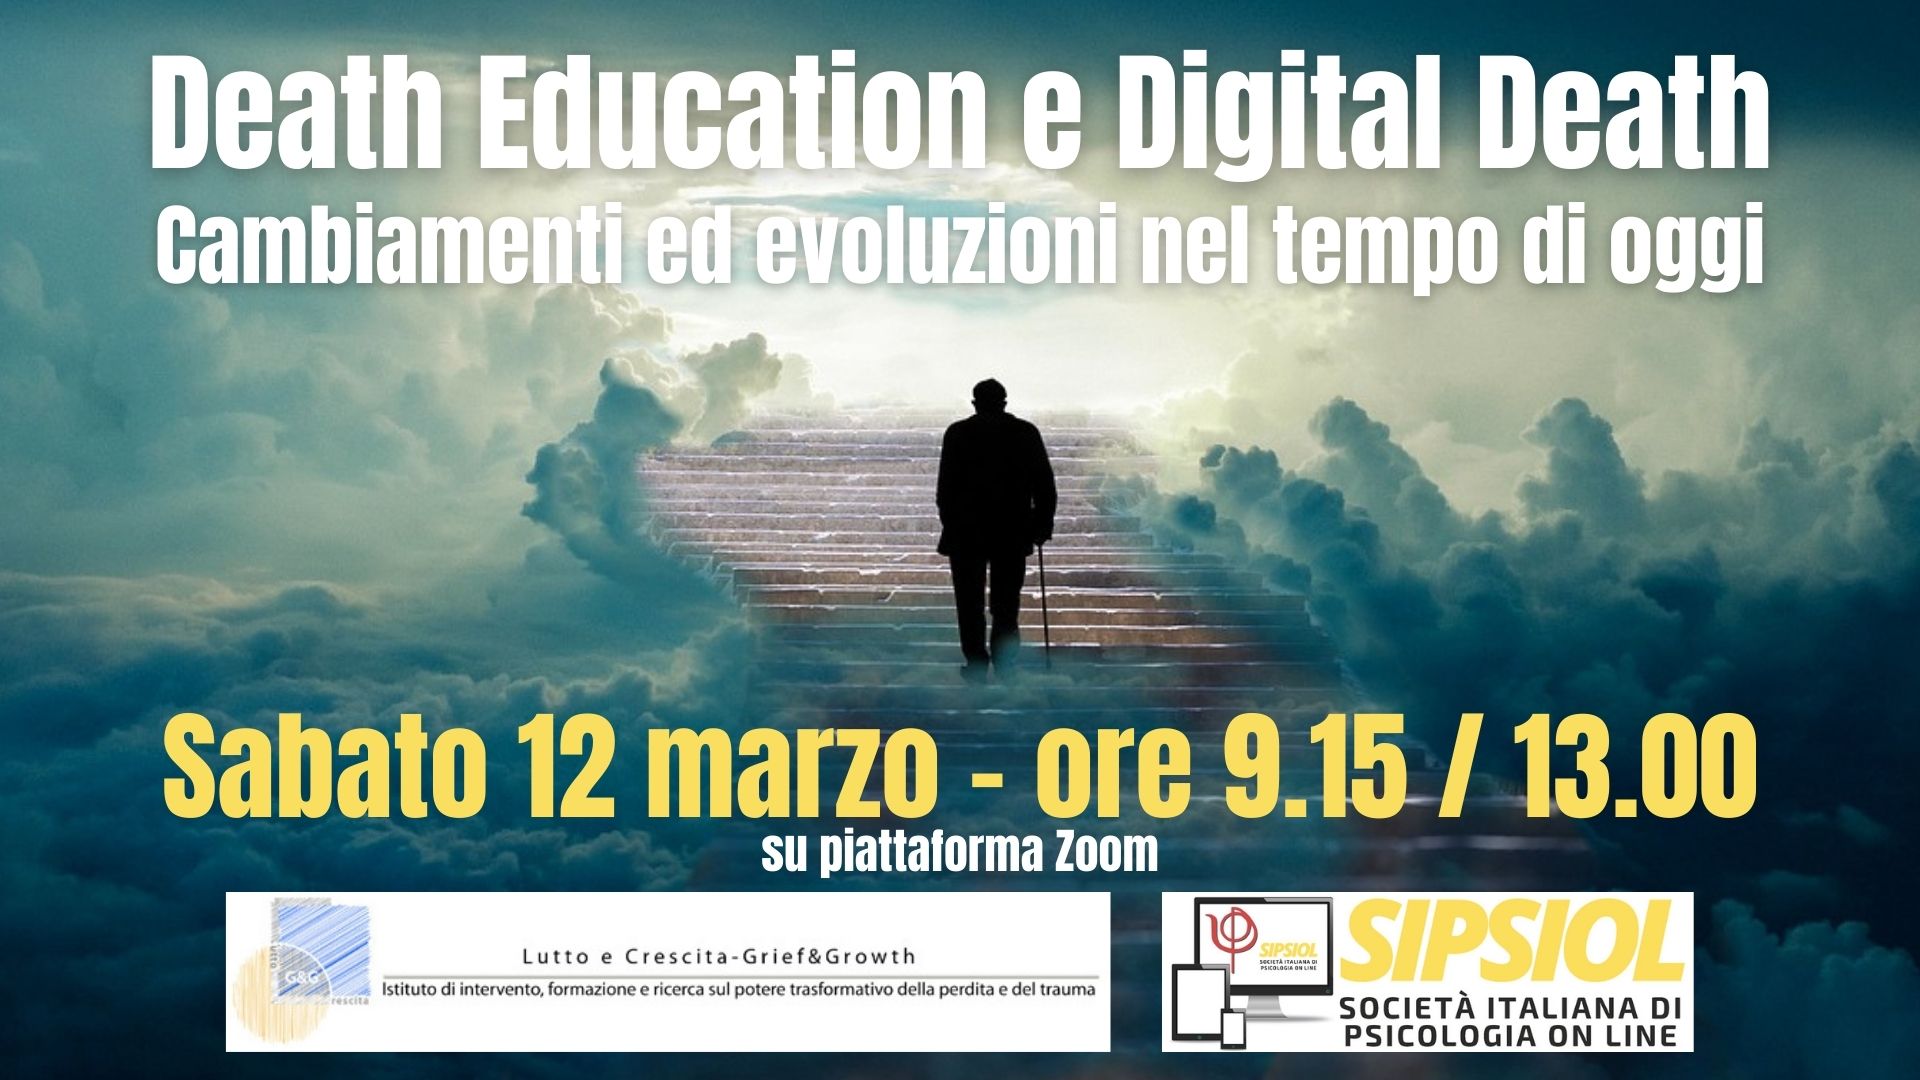 Death Education e Digital Deathjpg